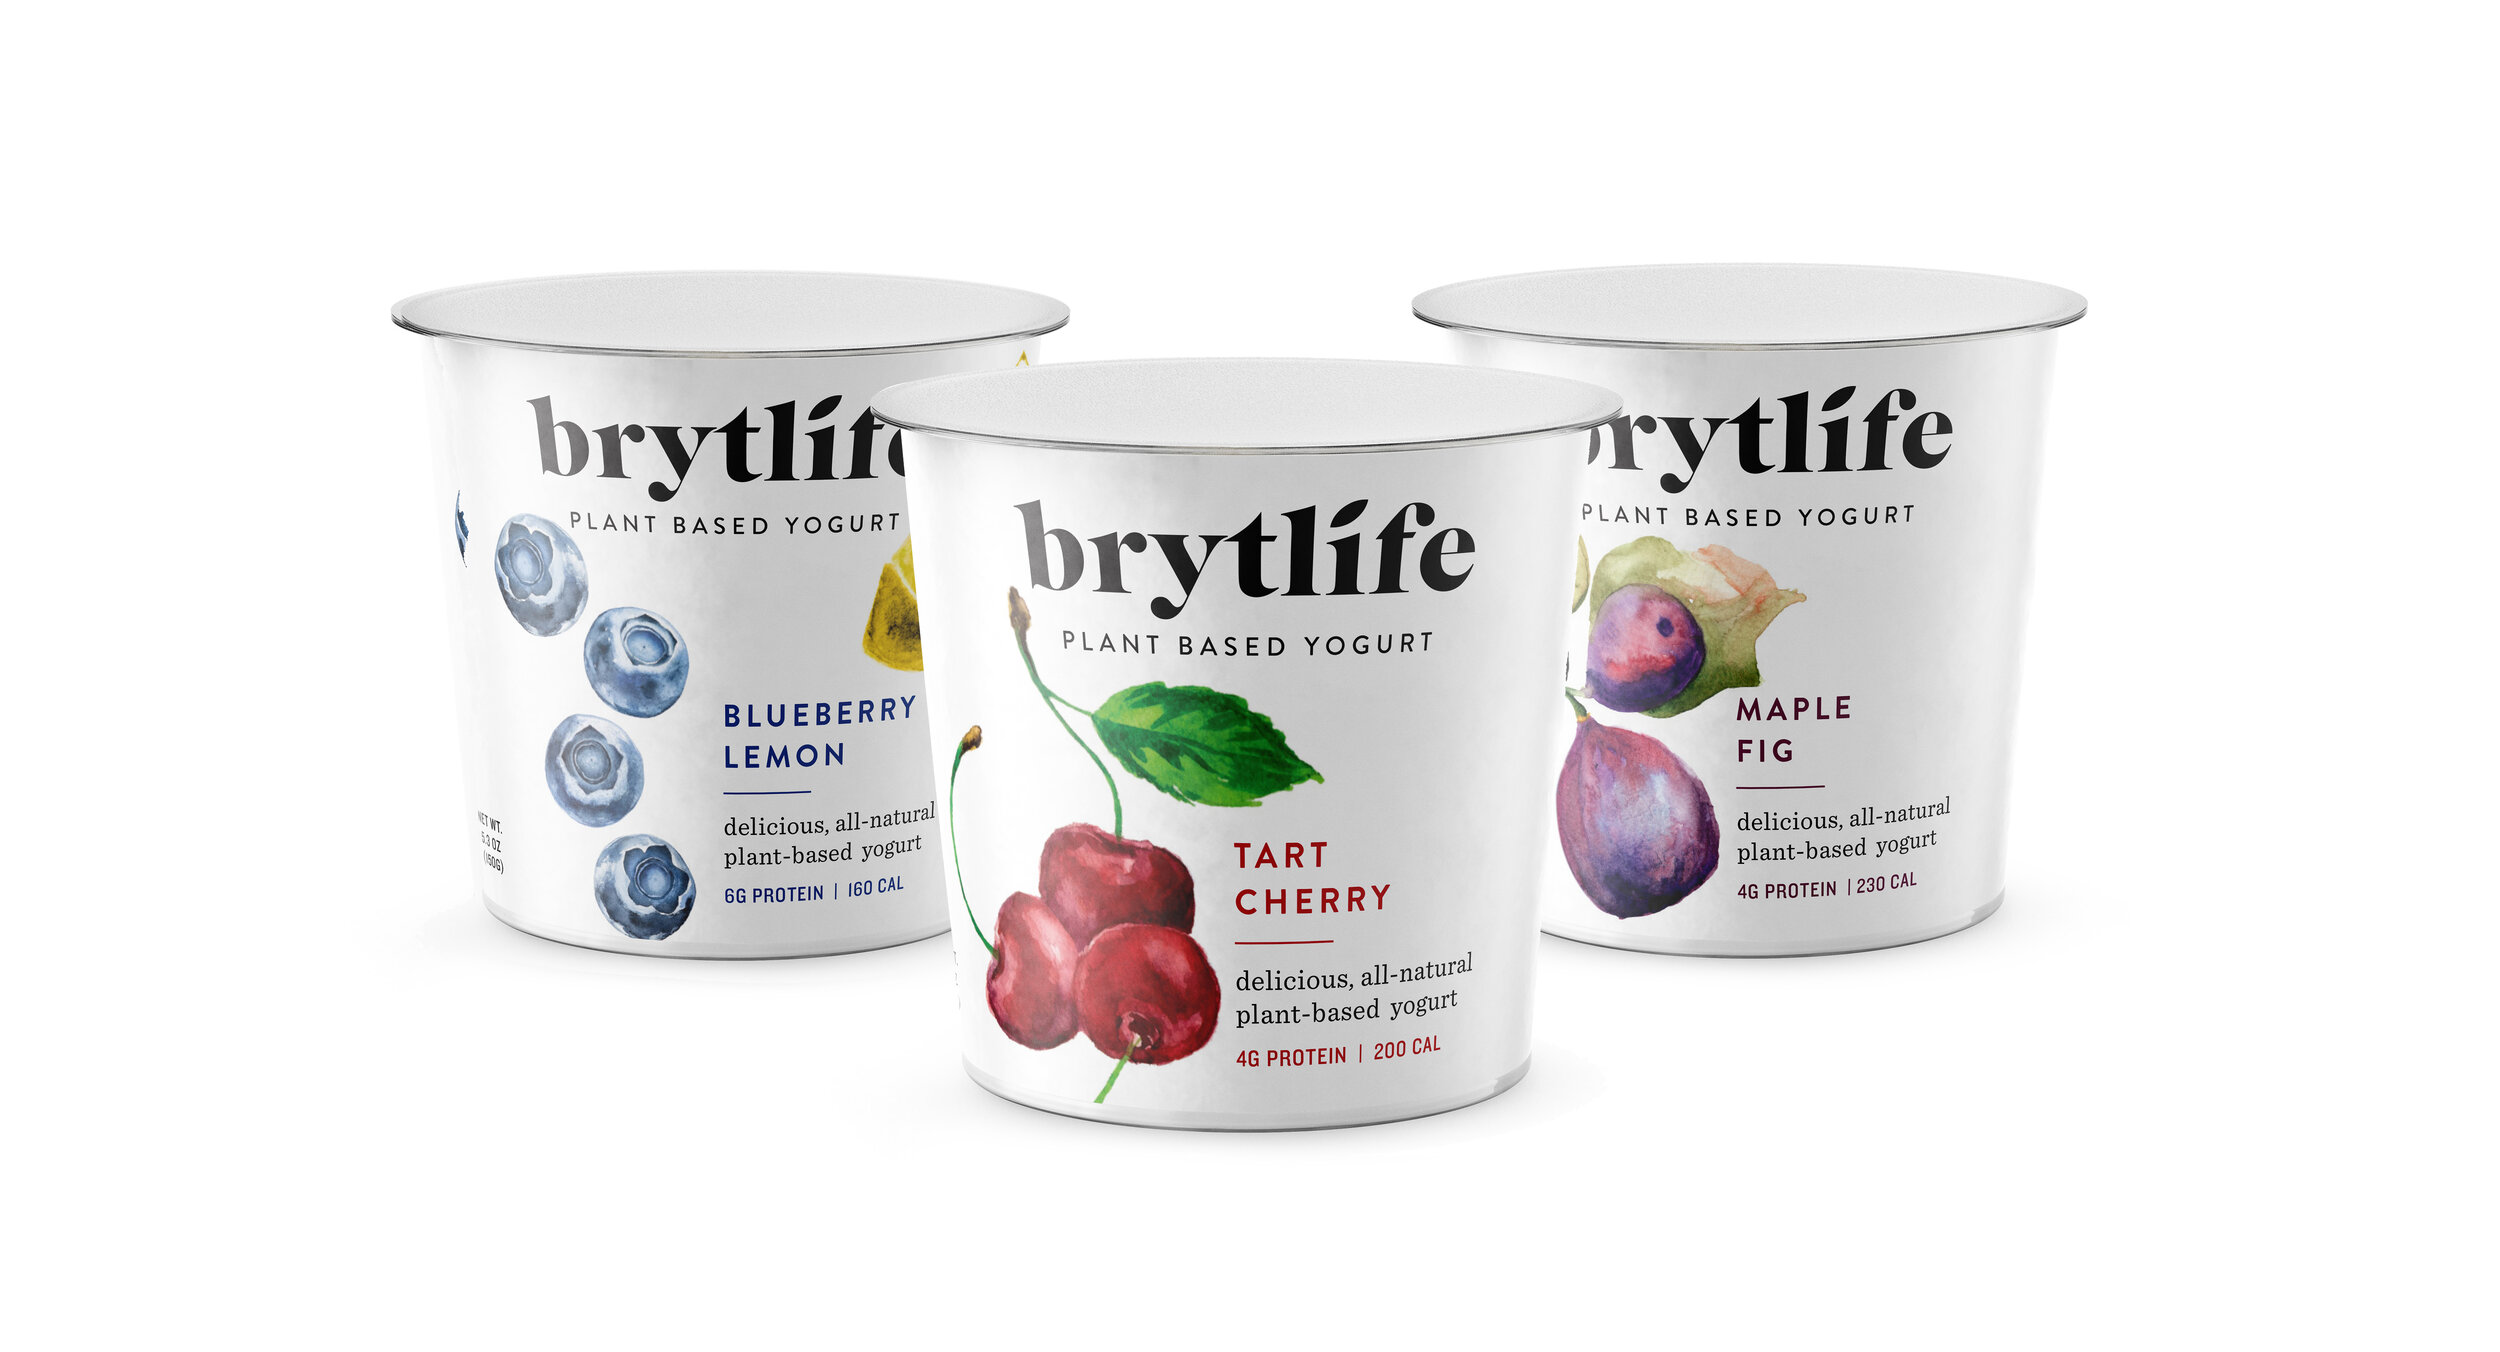 Brytlife-Vegan-Plant-Based-Yogurt-Flavors-Cherry-Blueberry-Fig-2020.jpg